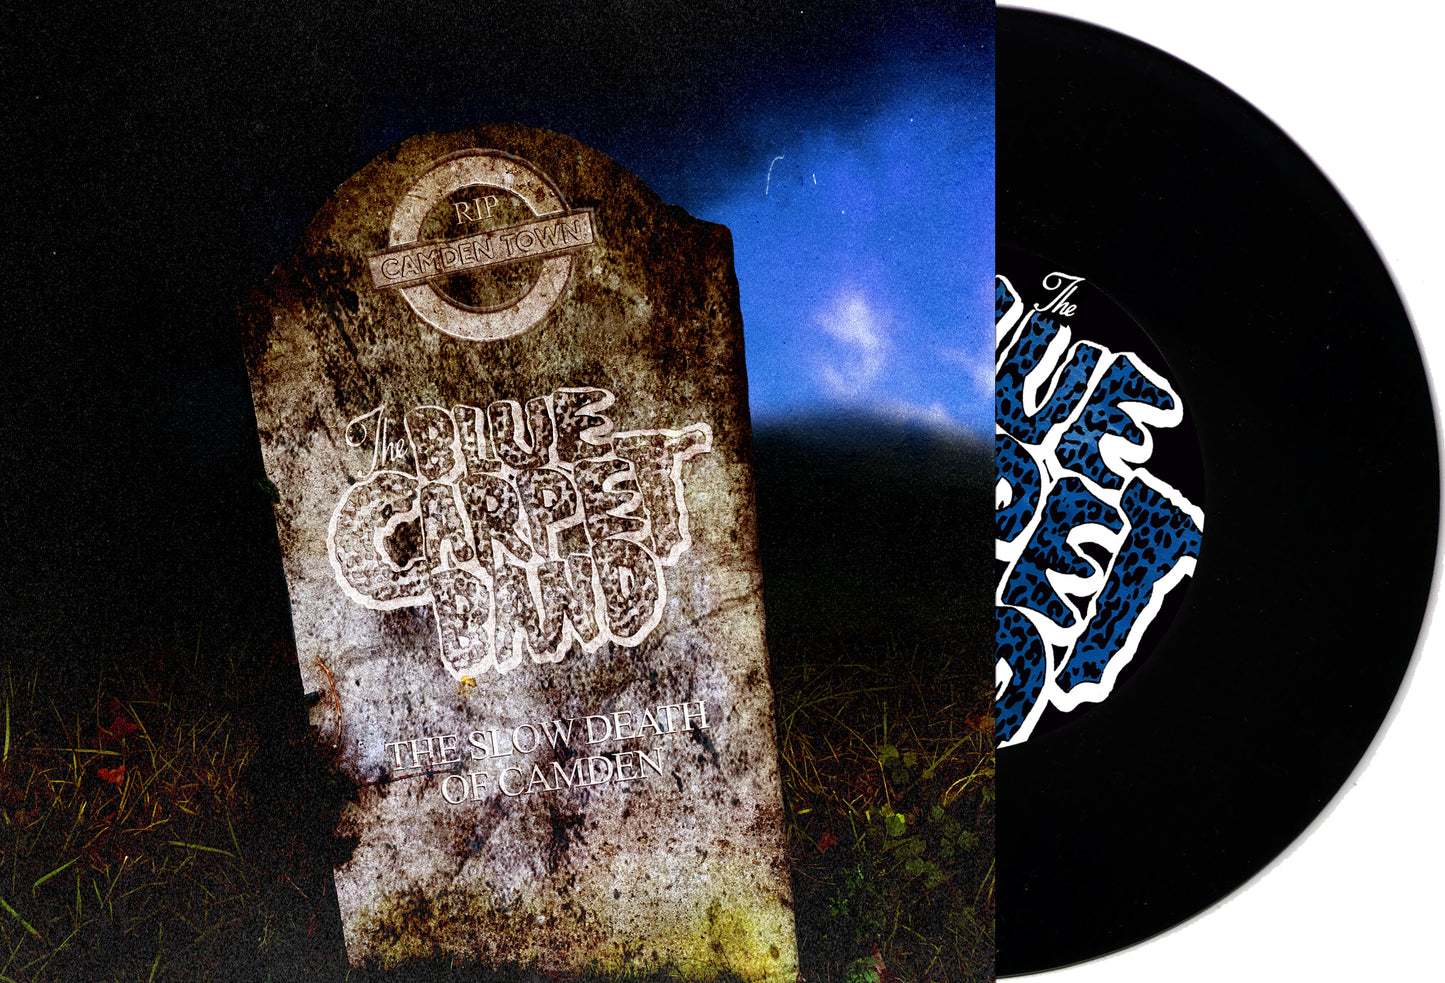 The Blue Carpet Band - B-MovieBoogie/Slow Death Of Camden 7" Vinyl